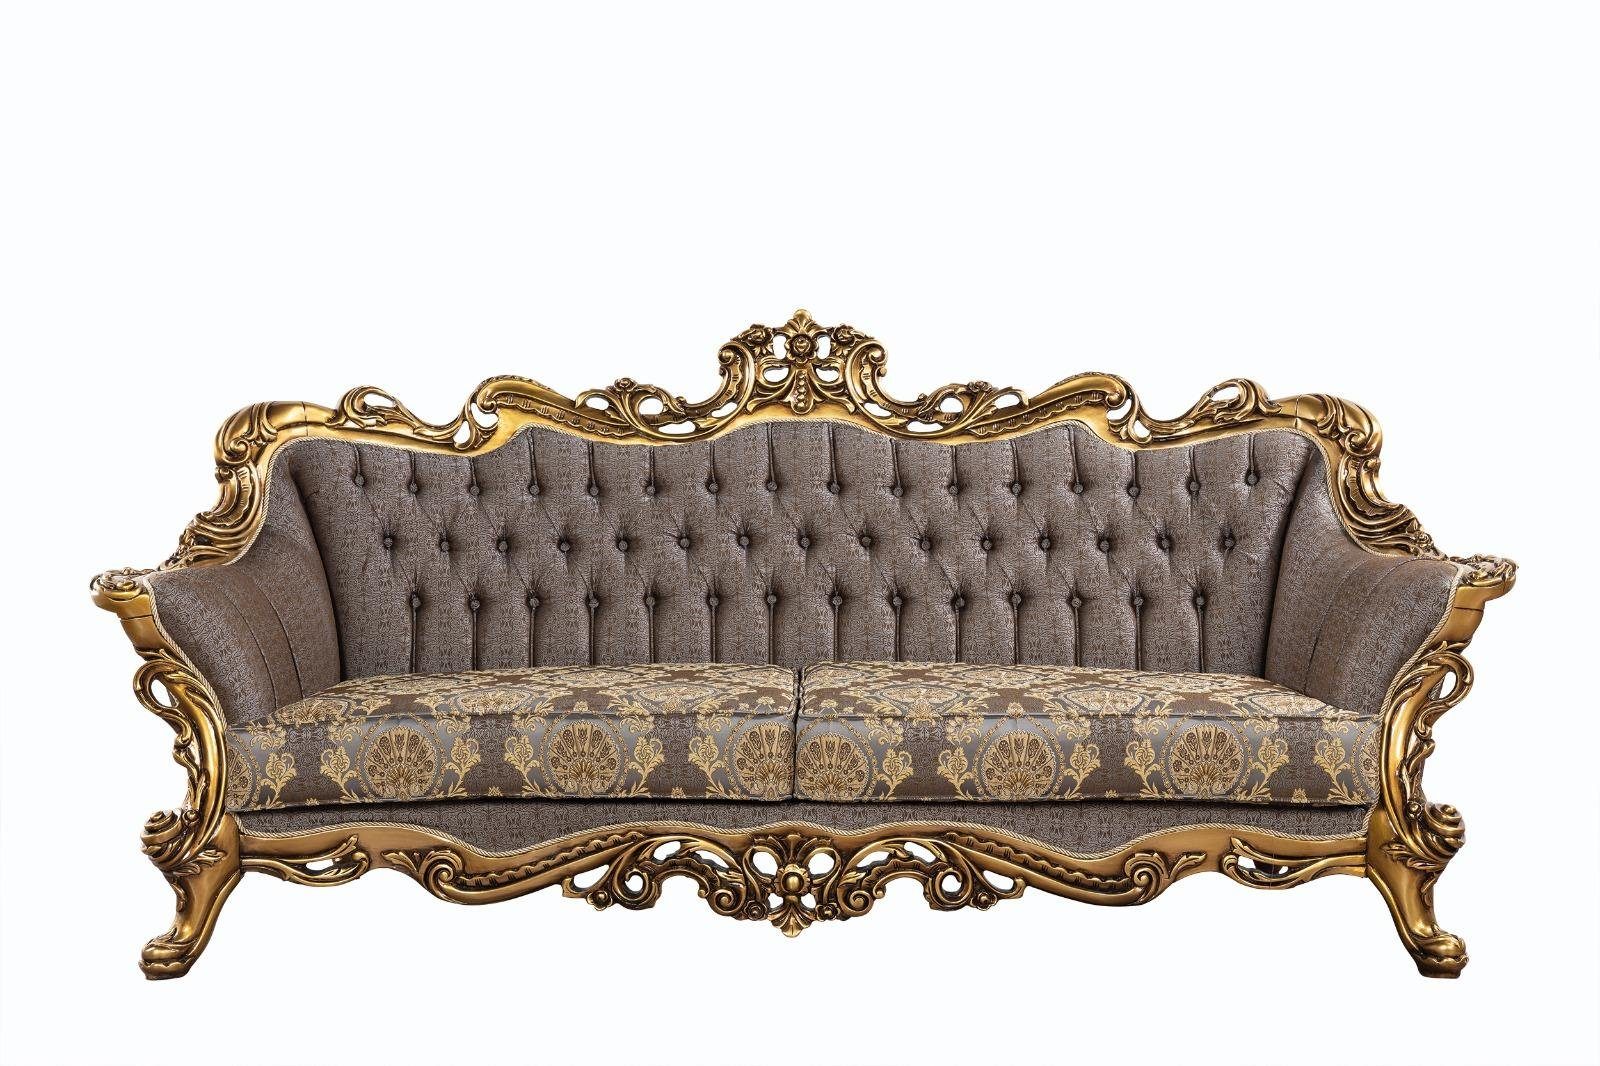 JVmoebel Sofa, Klassische stilvoll Neu luxus Chesterfield Couch Dreisitzer